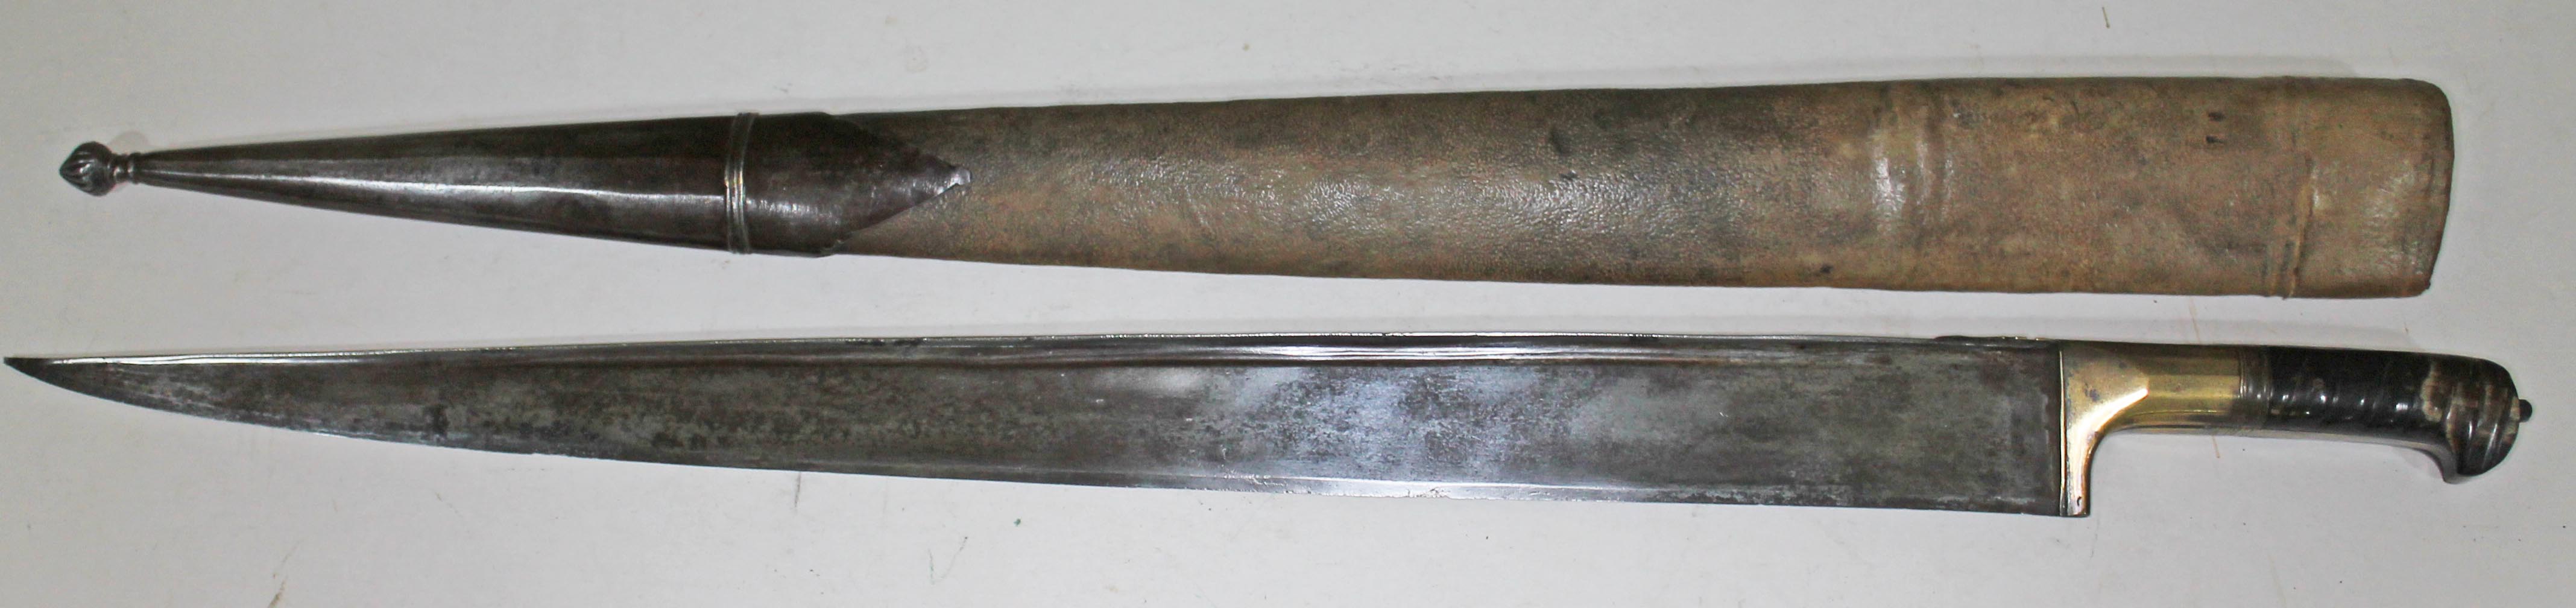 An Afghan khyber short sword and scabbard, length 87cm.